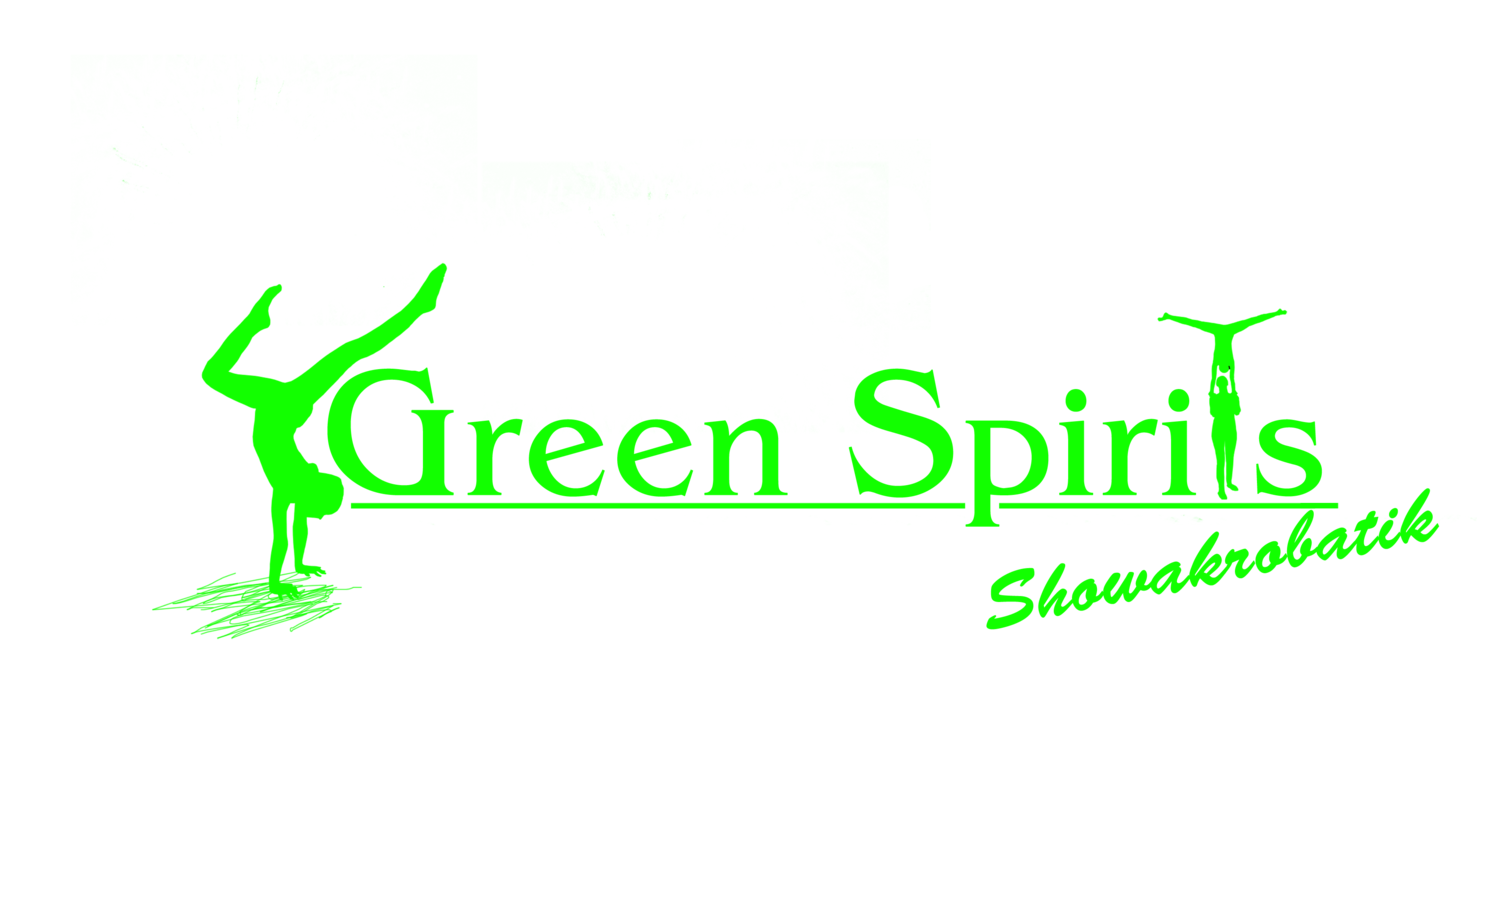 (c) Greenspirits.info